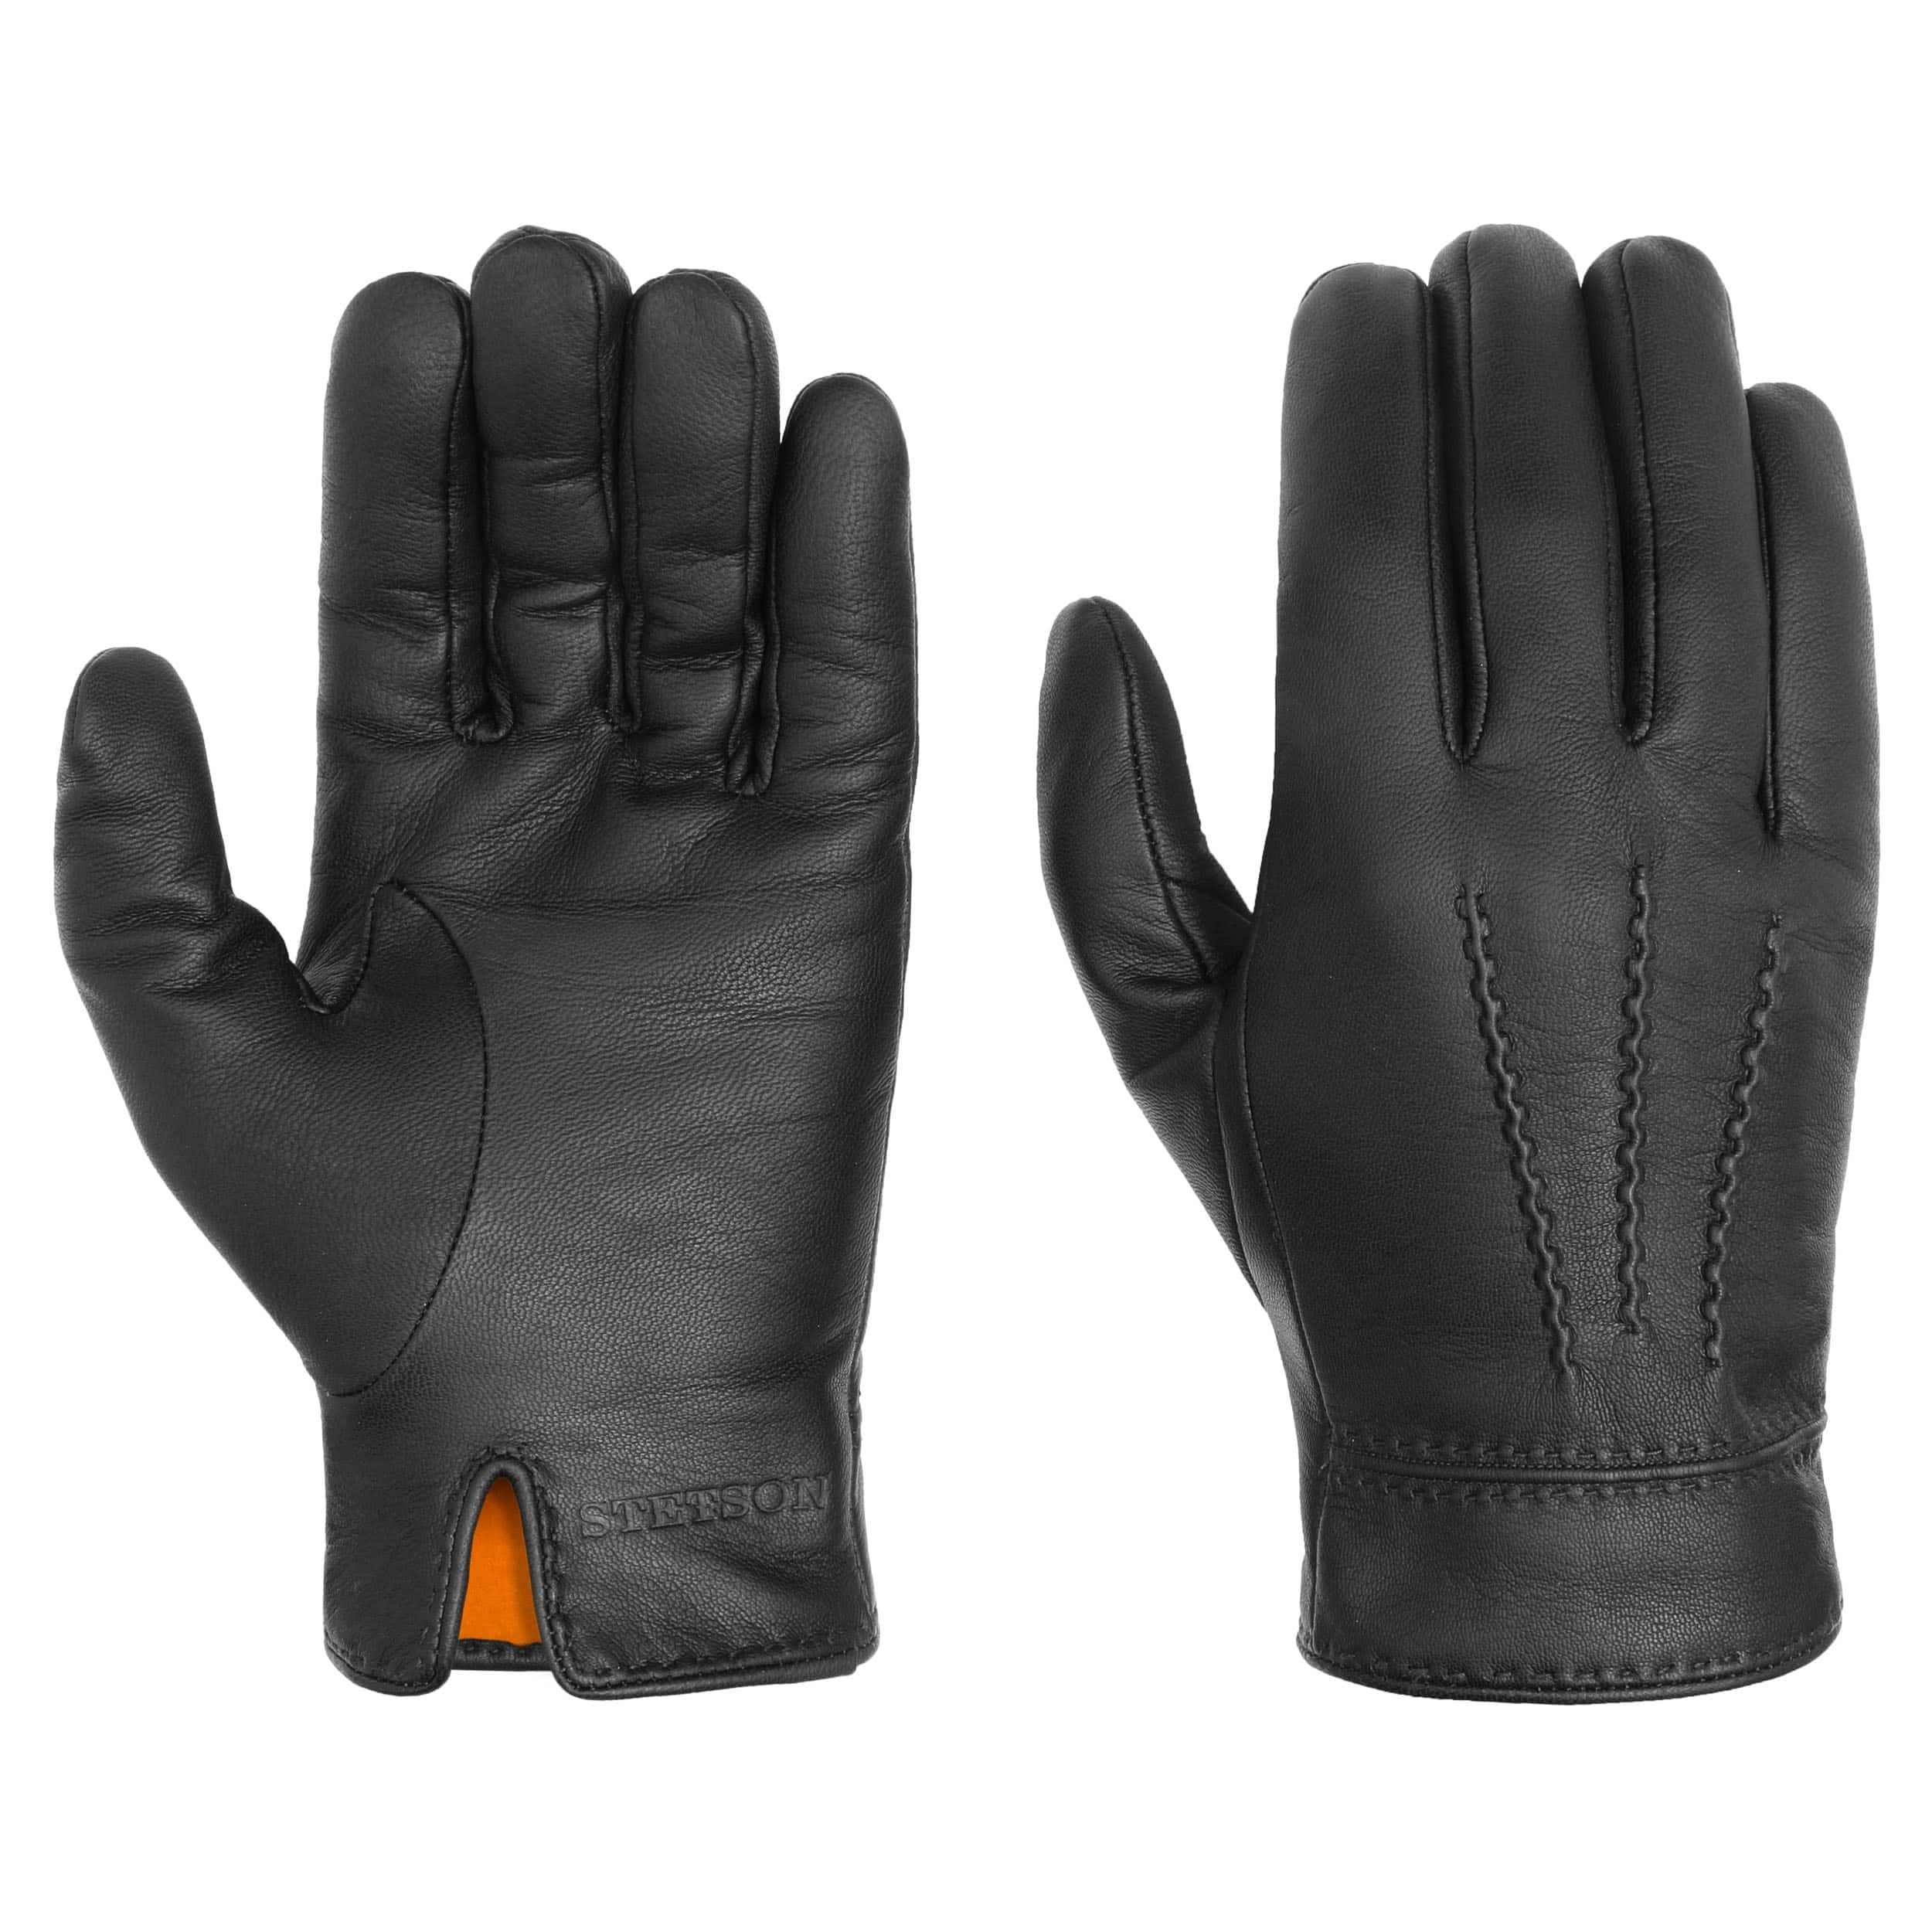 Stetson Classic Nappa Lederhandschuhe Handschuhe Herrenhandschuhe Fingerhandschuhe Damen/Herren mit Futter Herbst-Winter